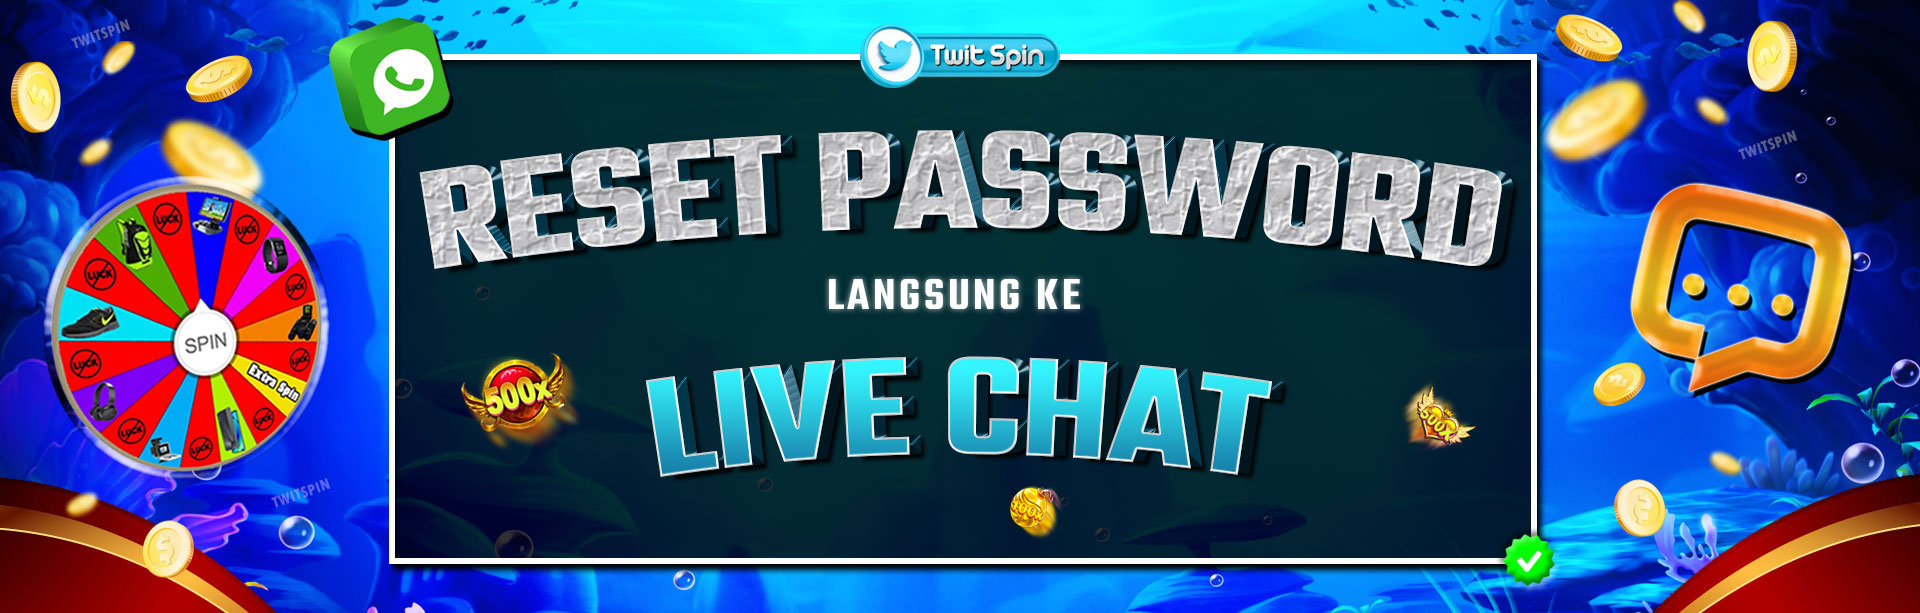 Reset Password Twitspin Lewat Livechat Dan Whatsapp